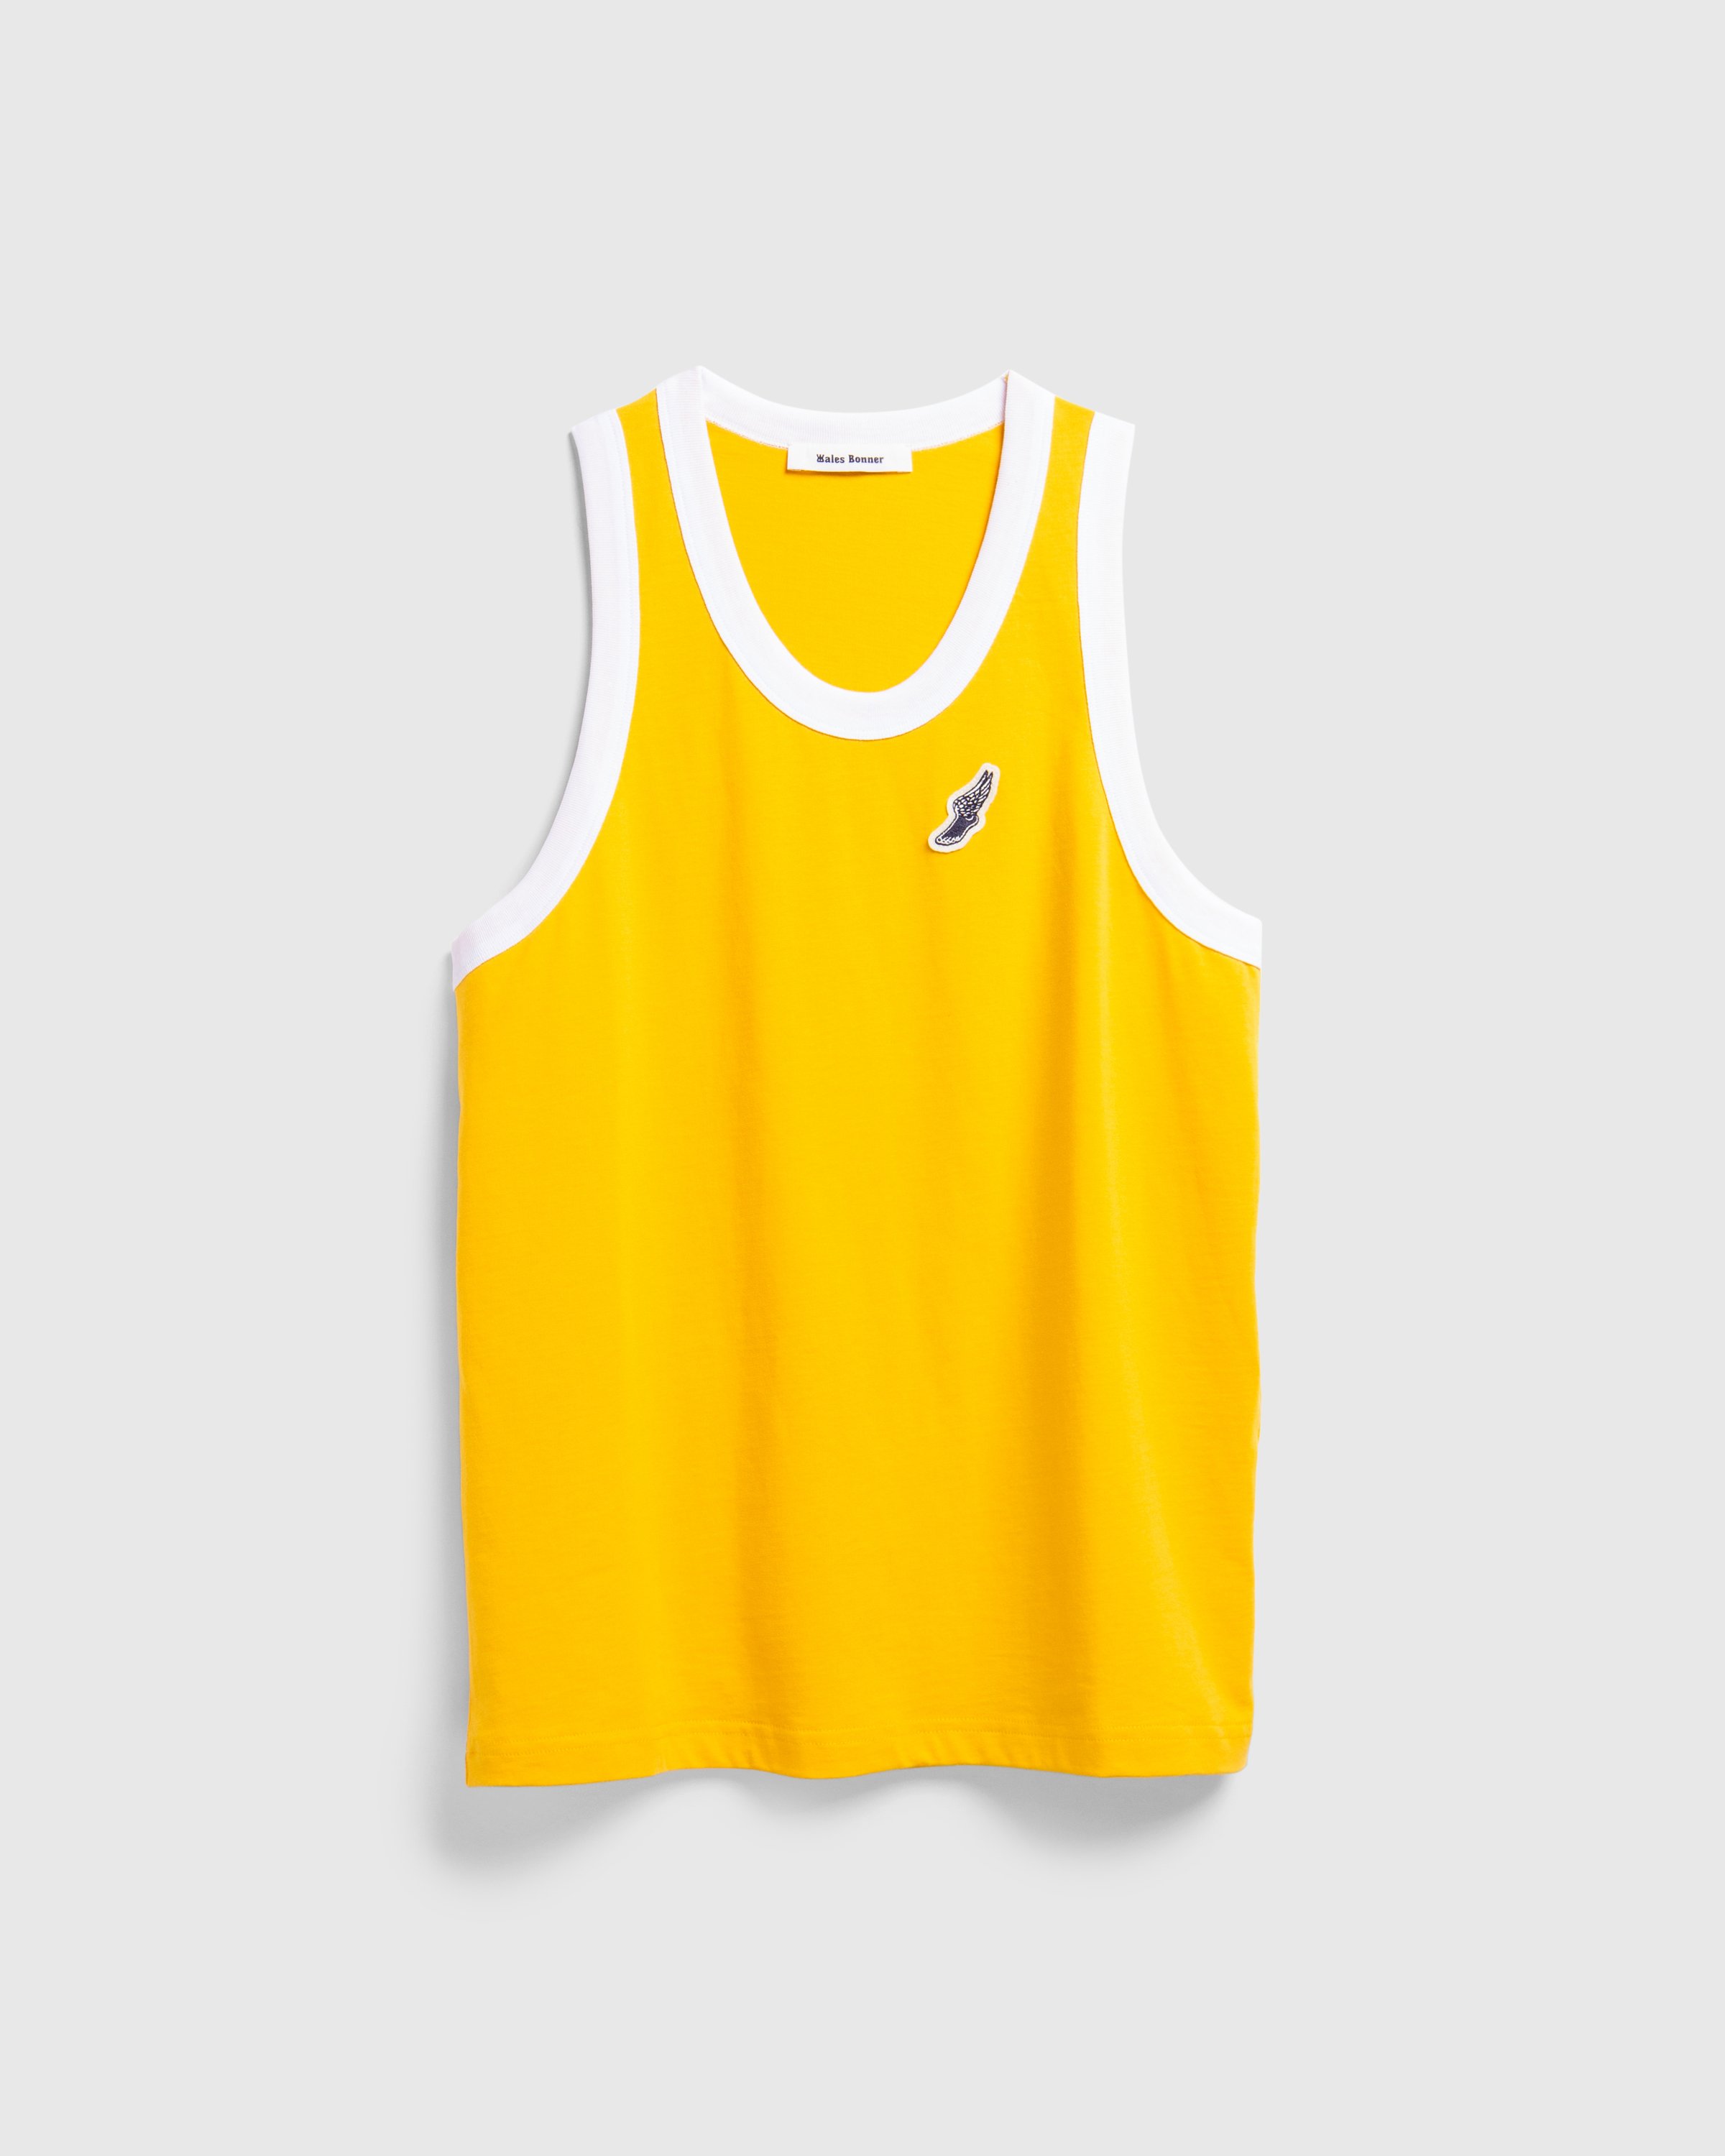 Wales Bonner - Plain T-Shirt Jersey Turmeric - Clothing - Yellow - Image 1